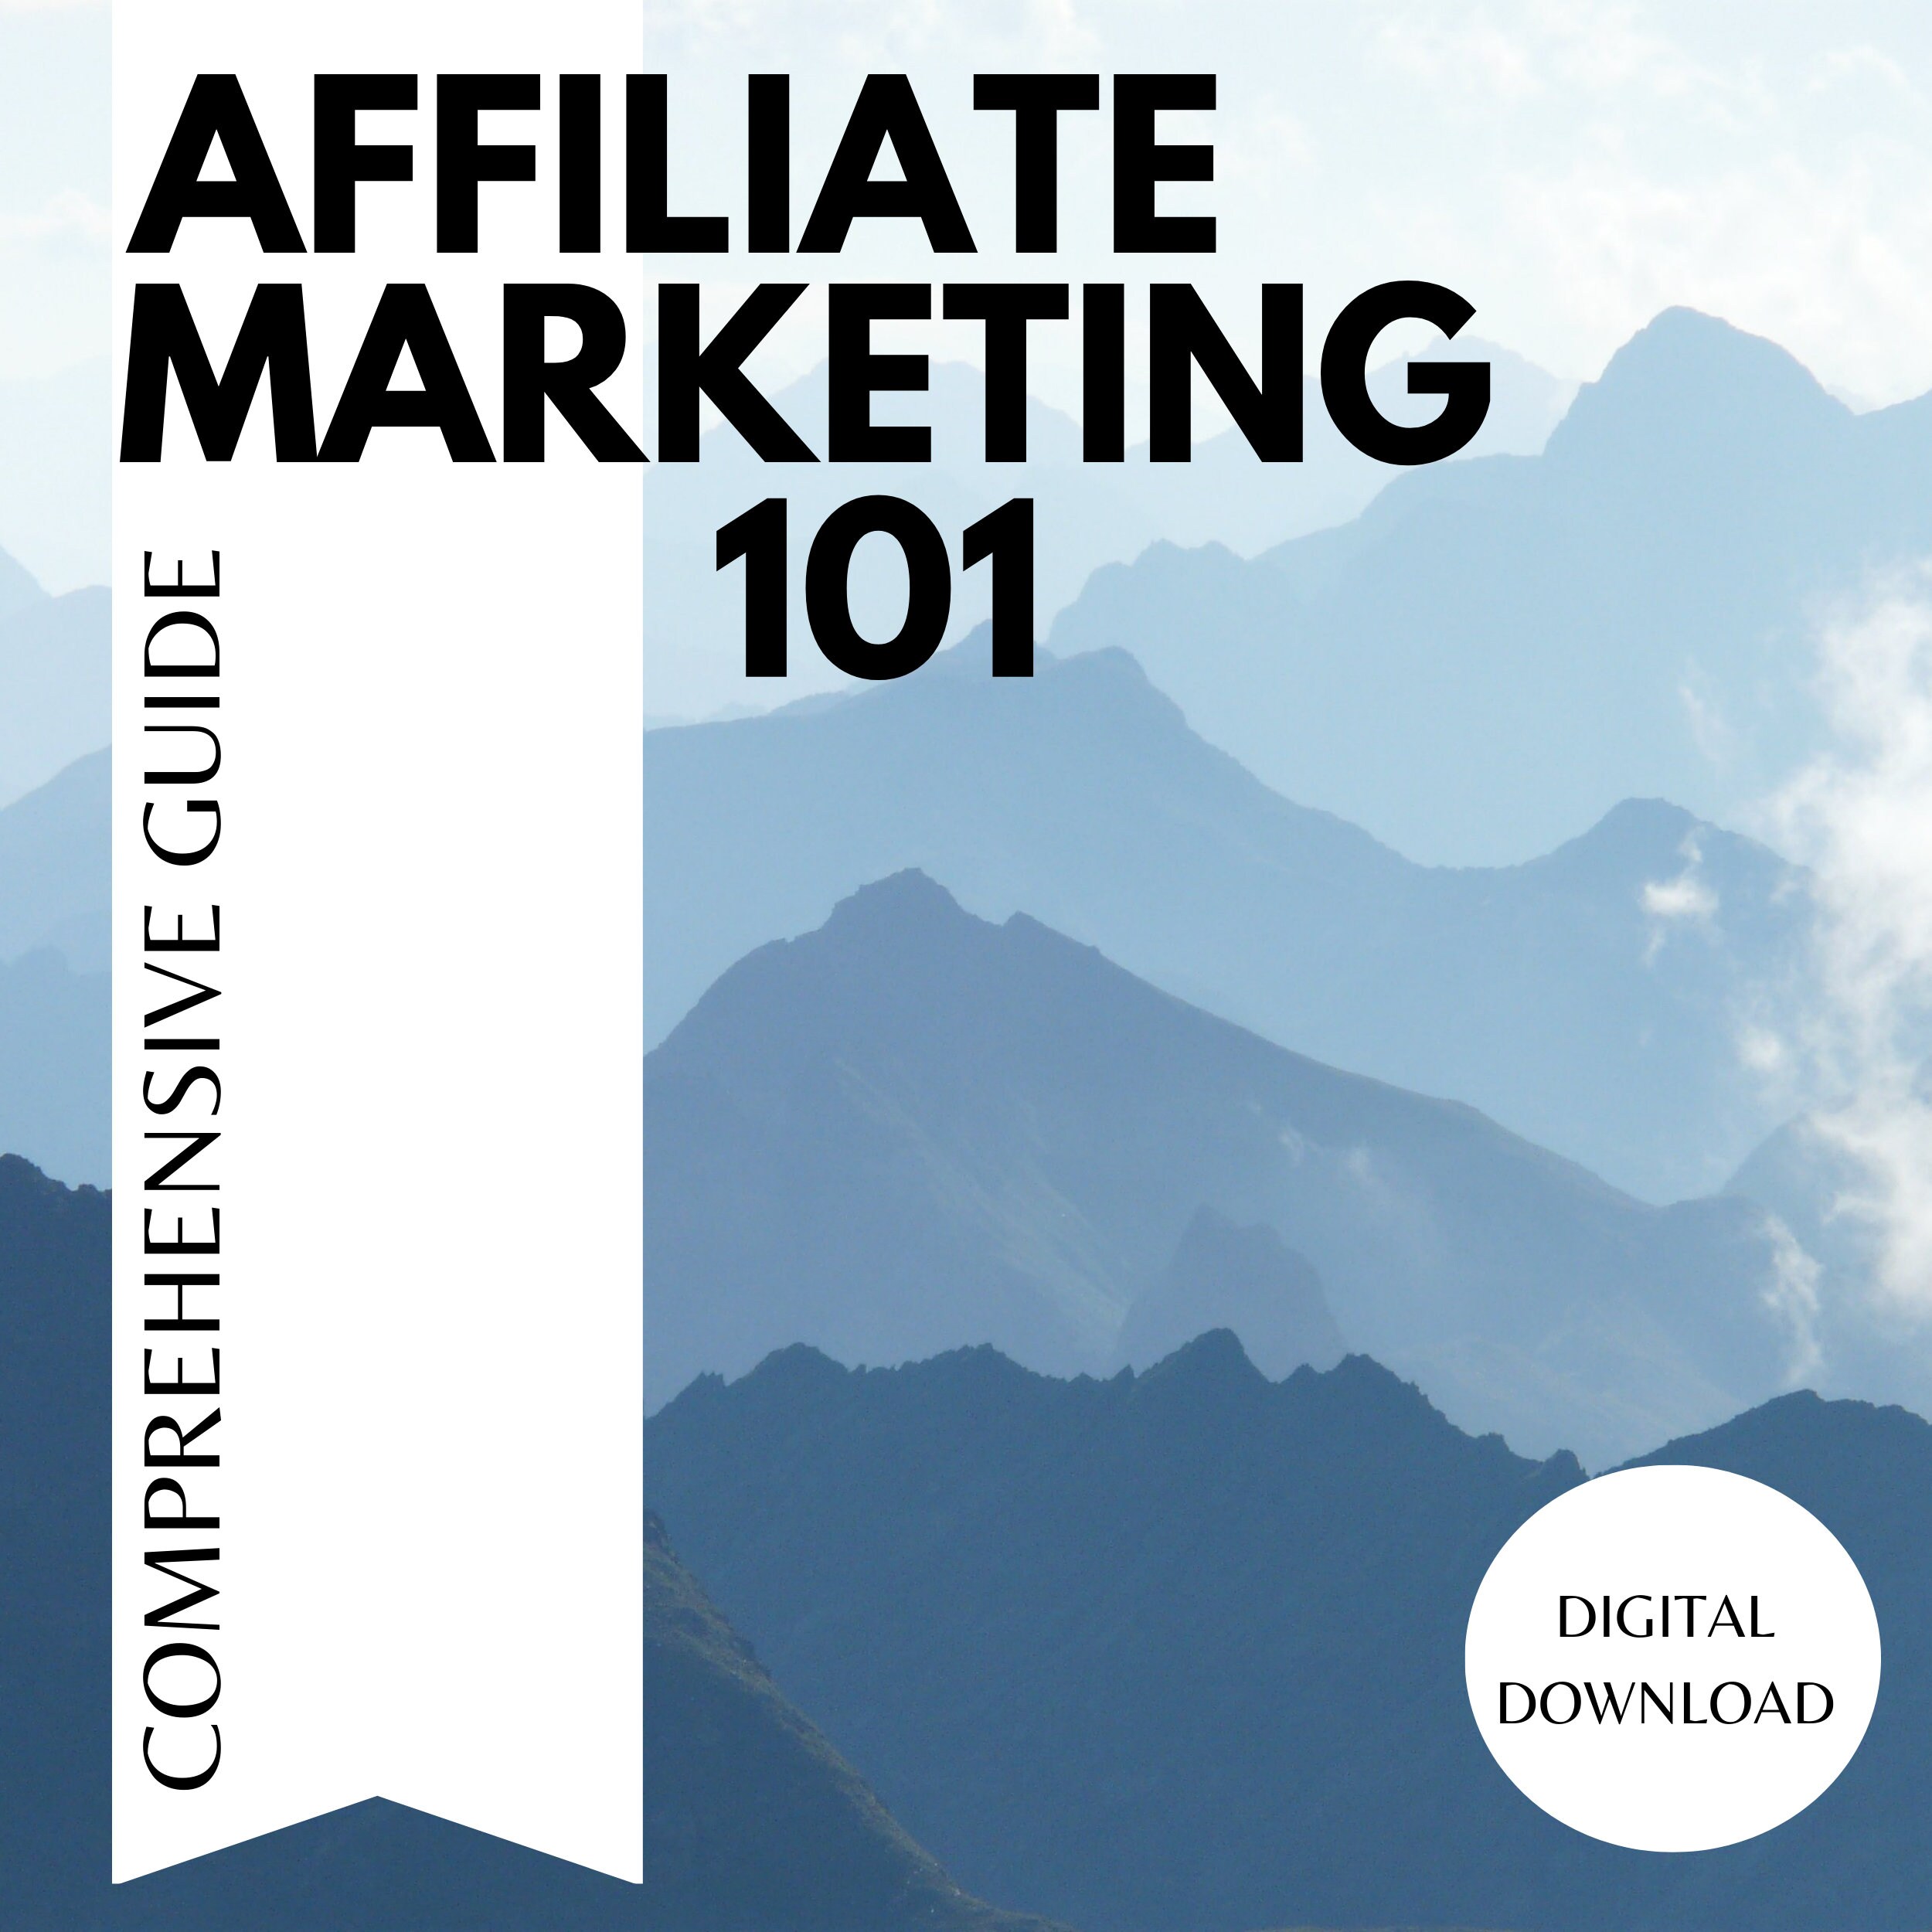 Affiliate Marketing Guide, Comprehensive , Digital Download, Learn 